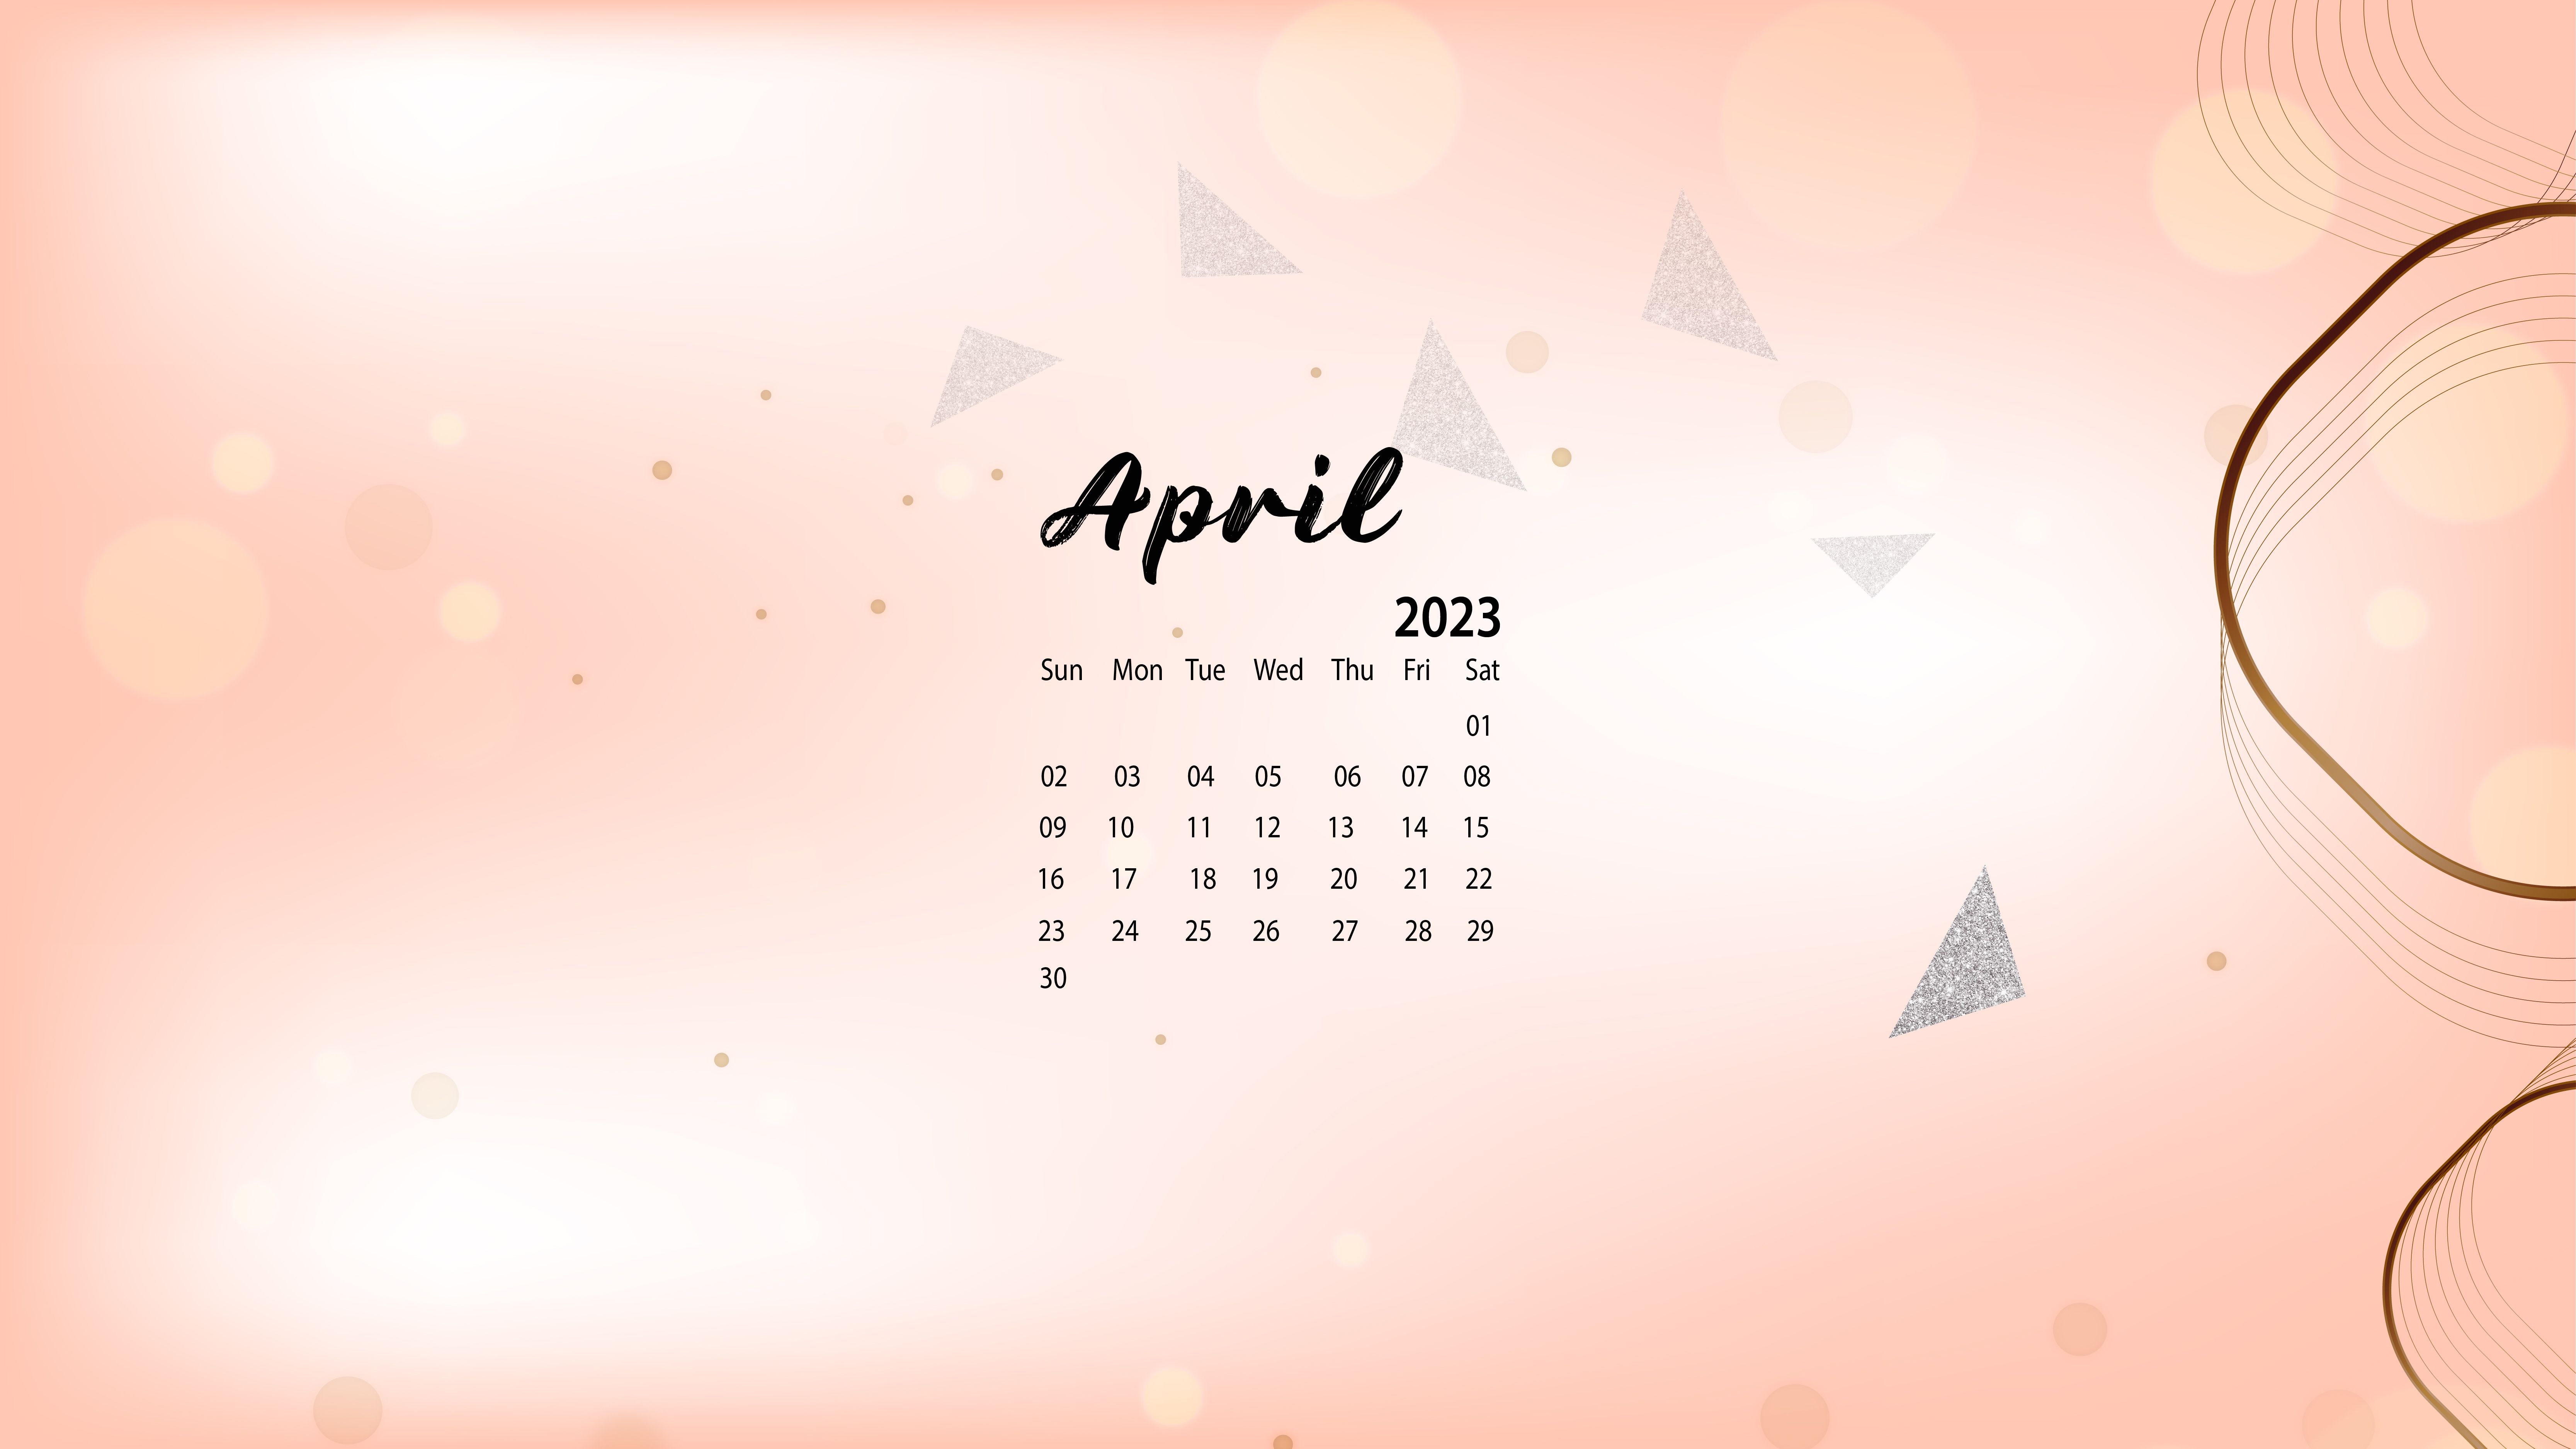  2023 Jahreskalender Hintergrundbild 6667x3750. April 2023 Desktop Wallpaper Calendar